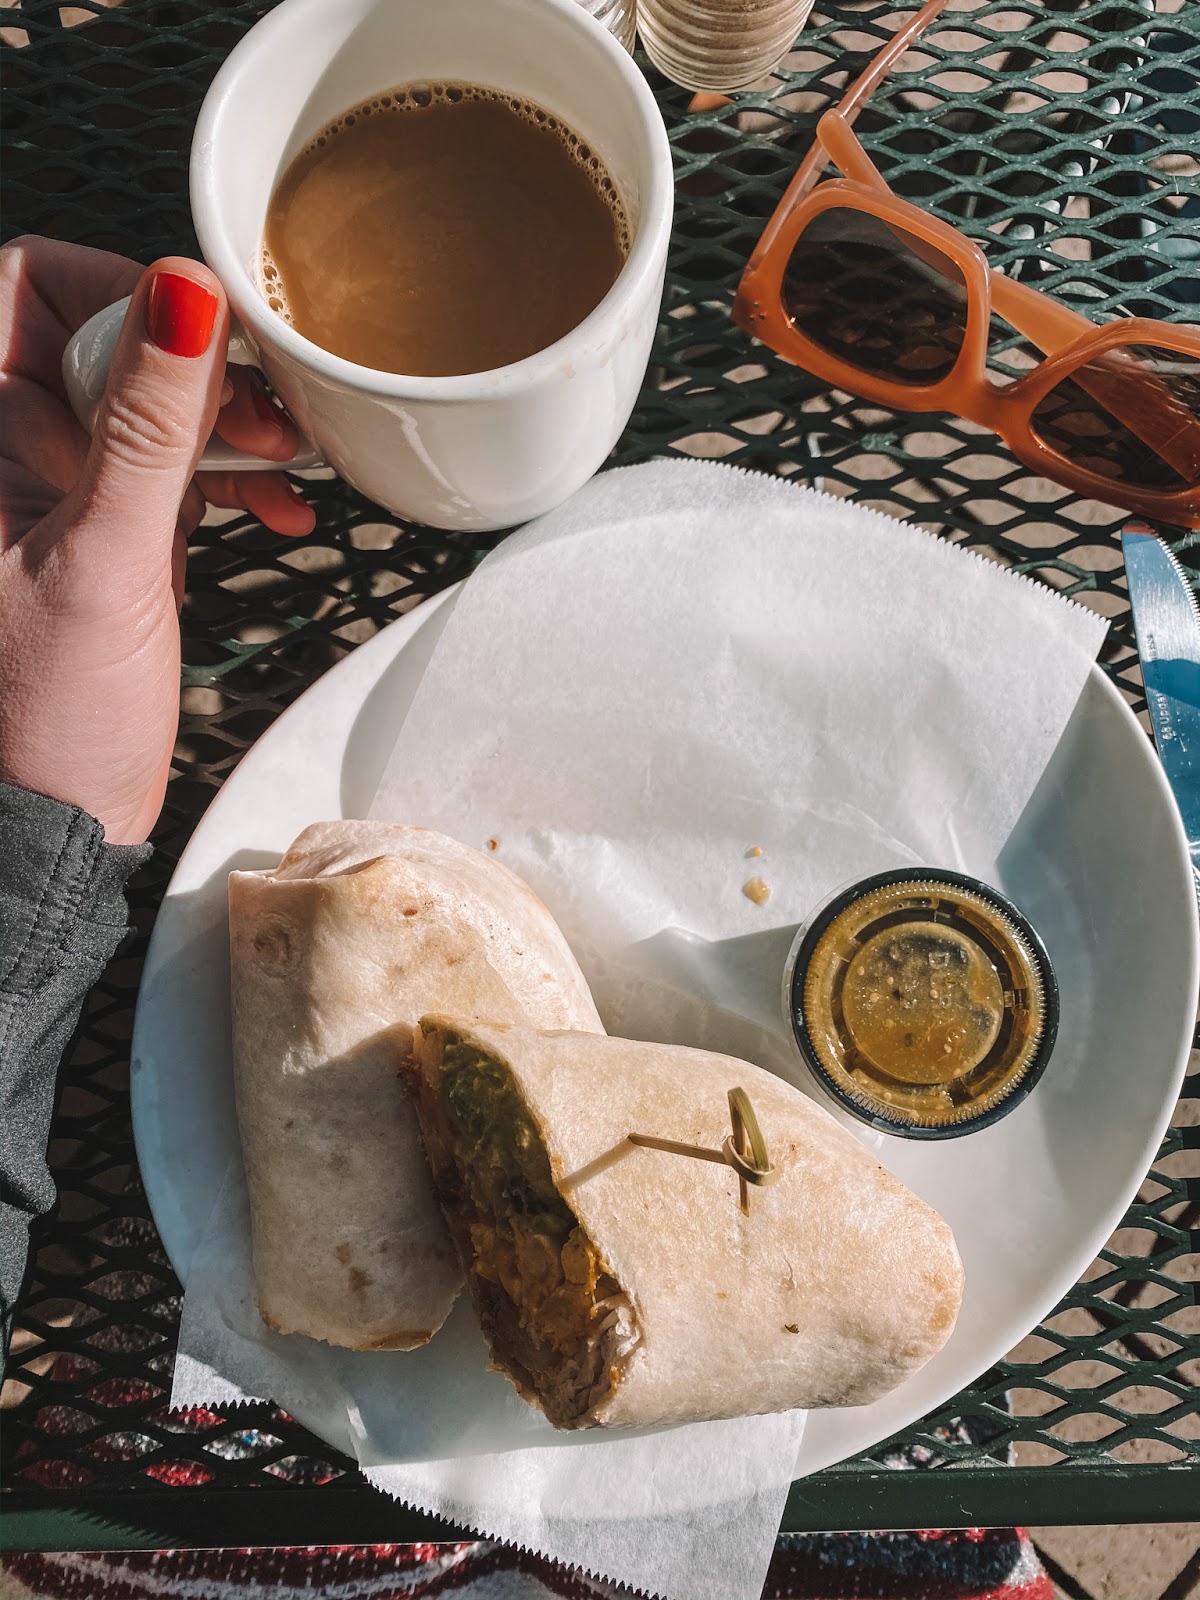 Travel blogger Amanda's OK devours the breakfast burrito at Indian Gardens Cafe in Sedona